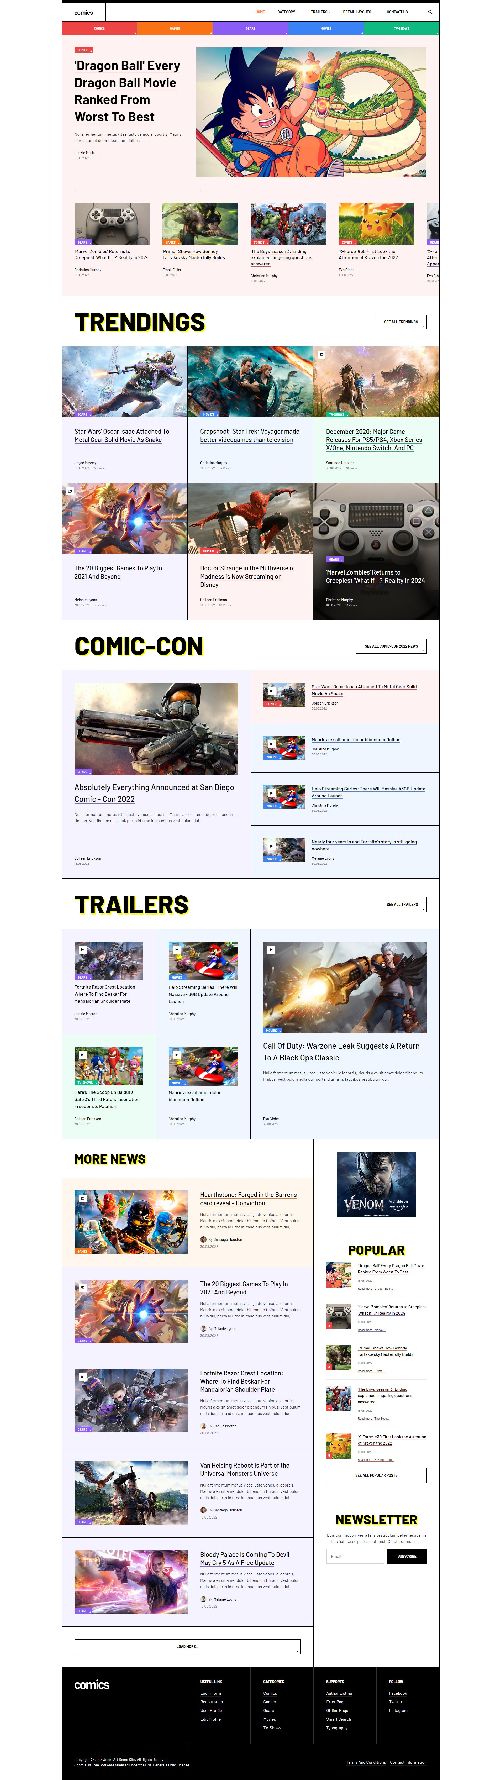 JA Comics - Comics, Movies News & Magazine Joomla Template